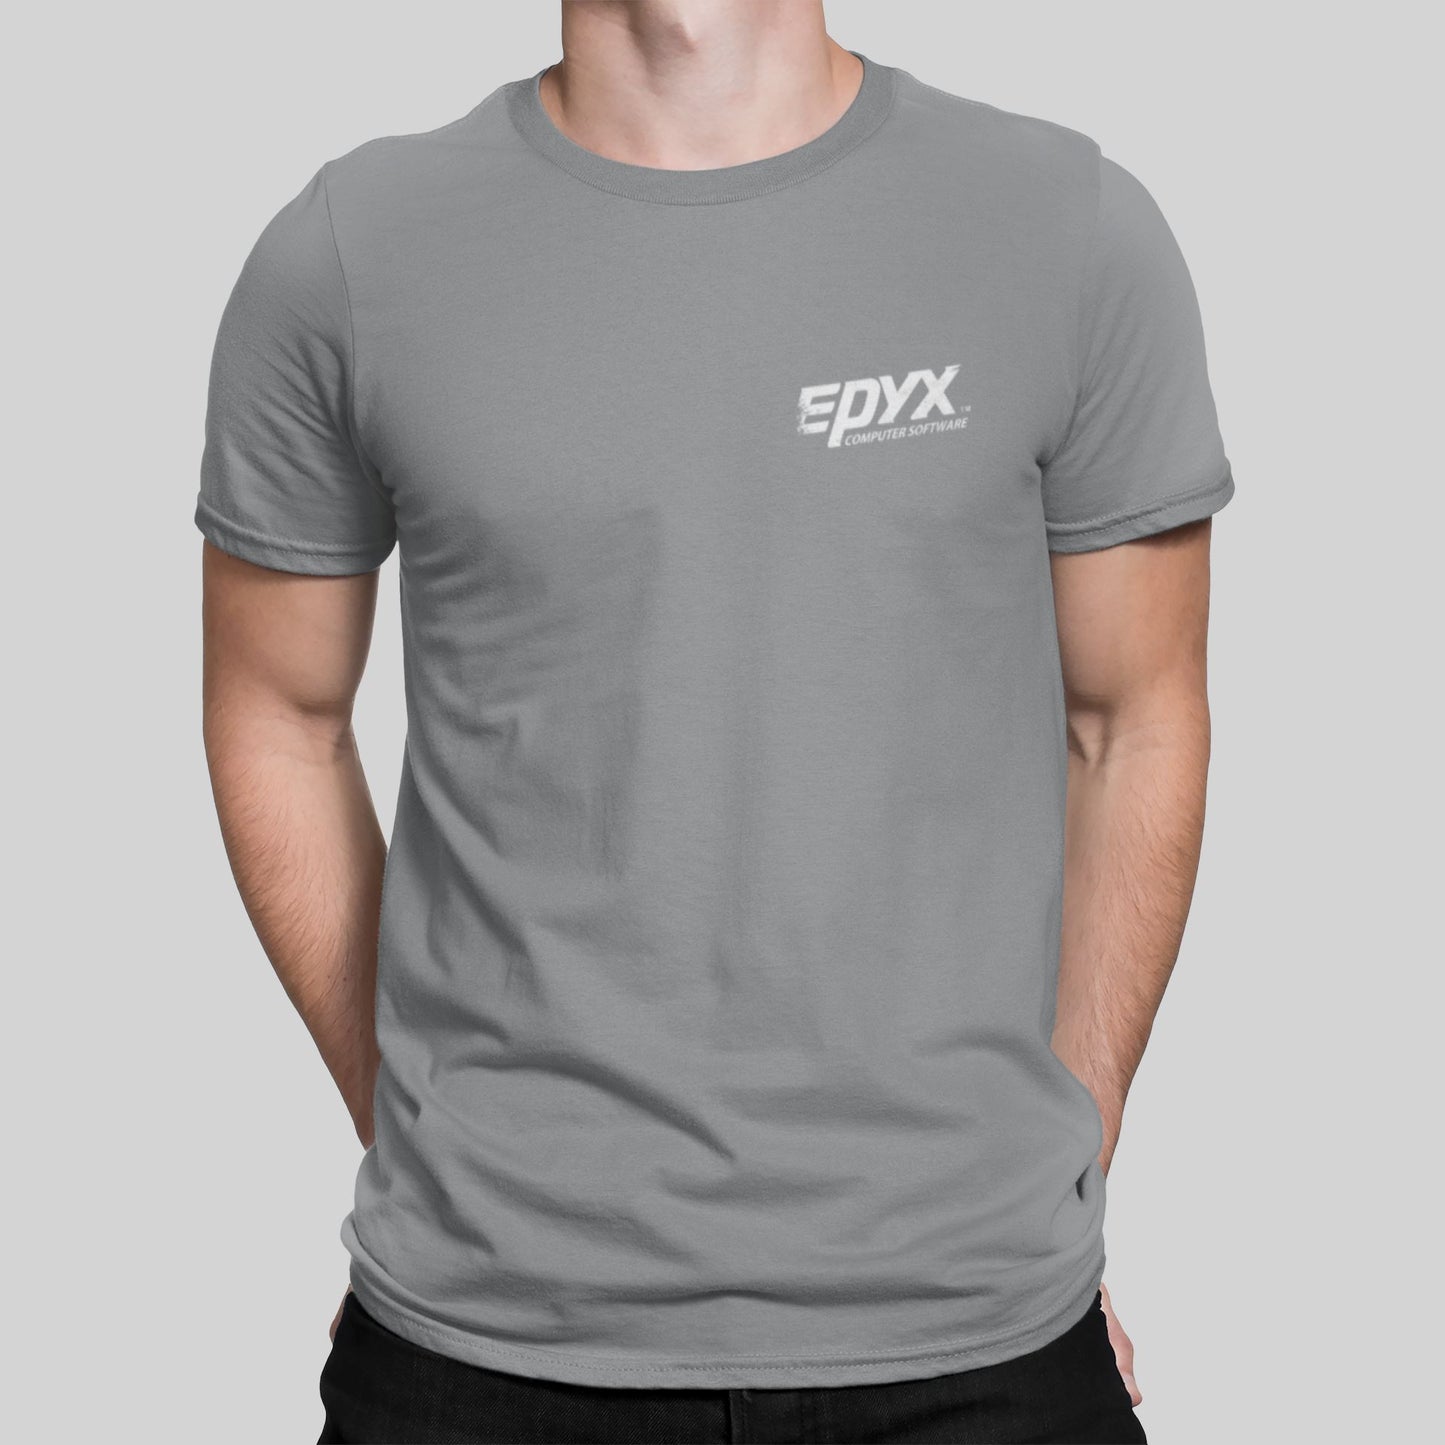 Epyx Software Pocket Print Retro Gaming T-Shirt T-Shirt Seven Squared Small 34-36" Sport Grey 